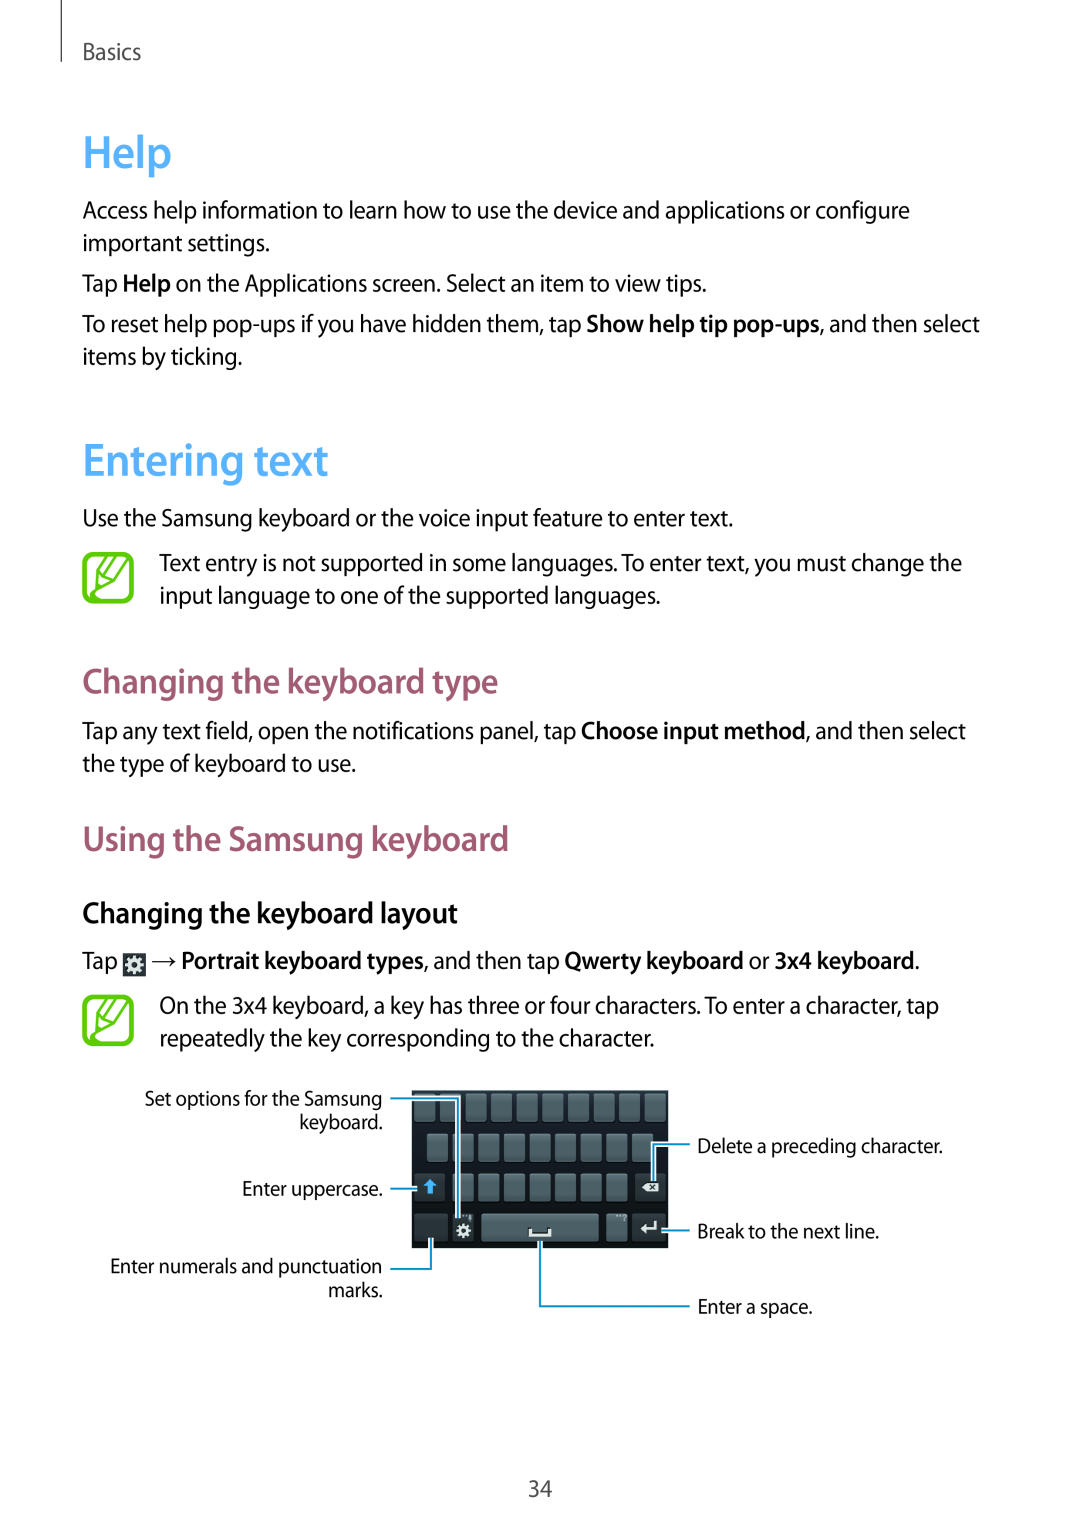 Samsung GT-I8730ZWAMEO, GT-I8730TAAVGR Help, Entering text, Changing the keyboard type, Using the Samsung keyboard, Basics 